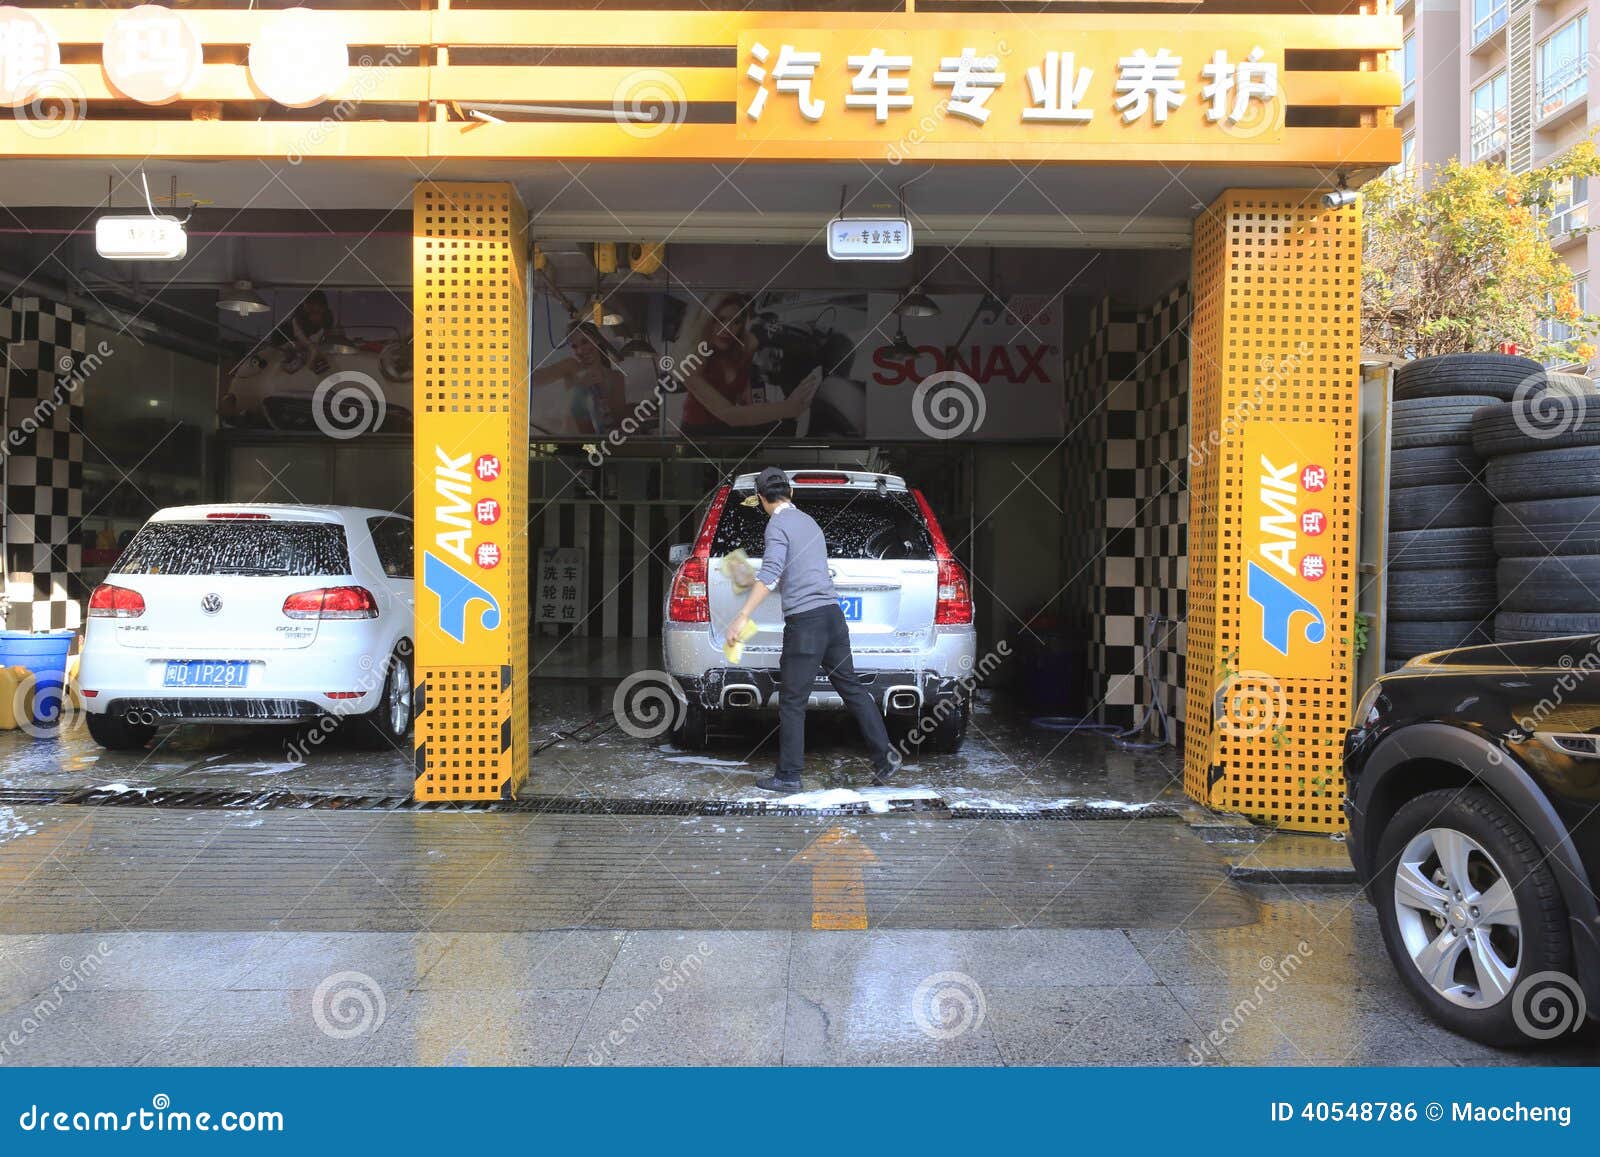 Car wash shop photo. Image cleaner, failure 40548786